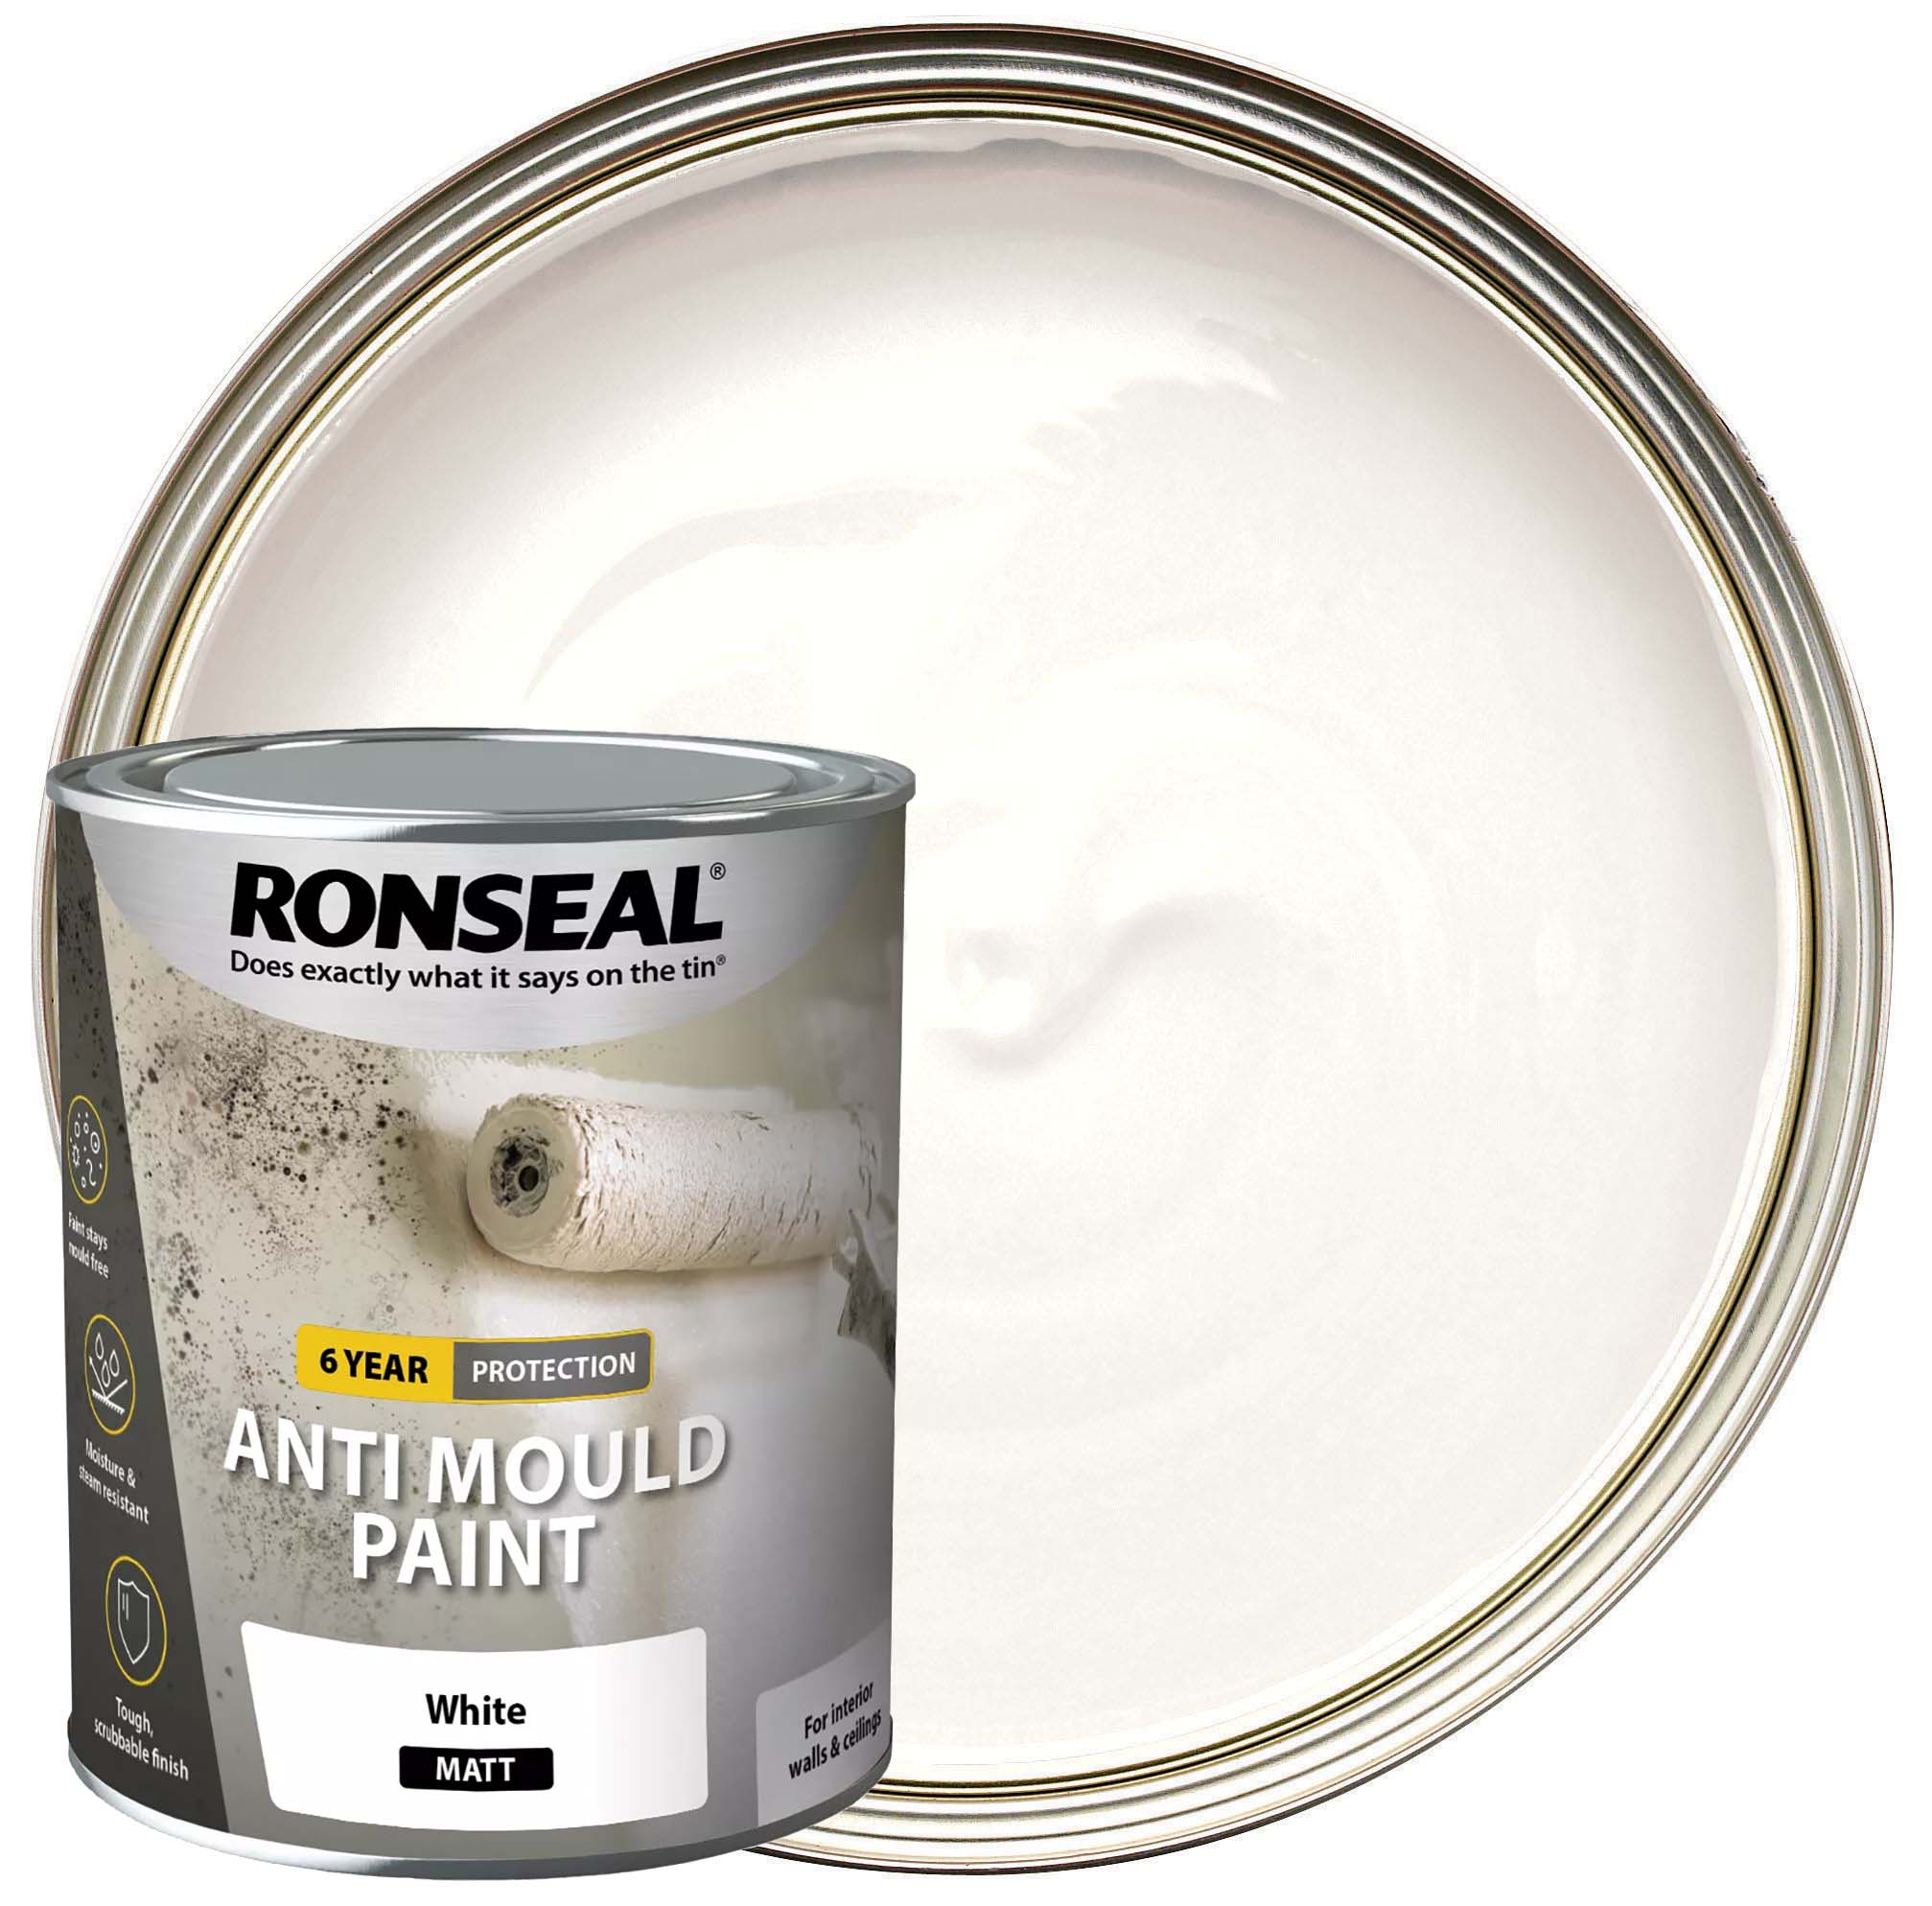 Image of Ronseal 6 Year Anti Mould Paint White Matt 750ml